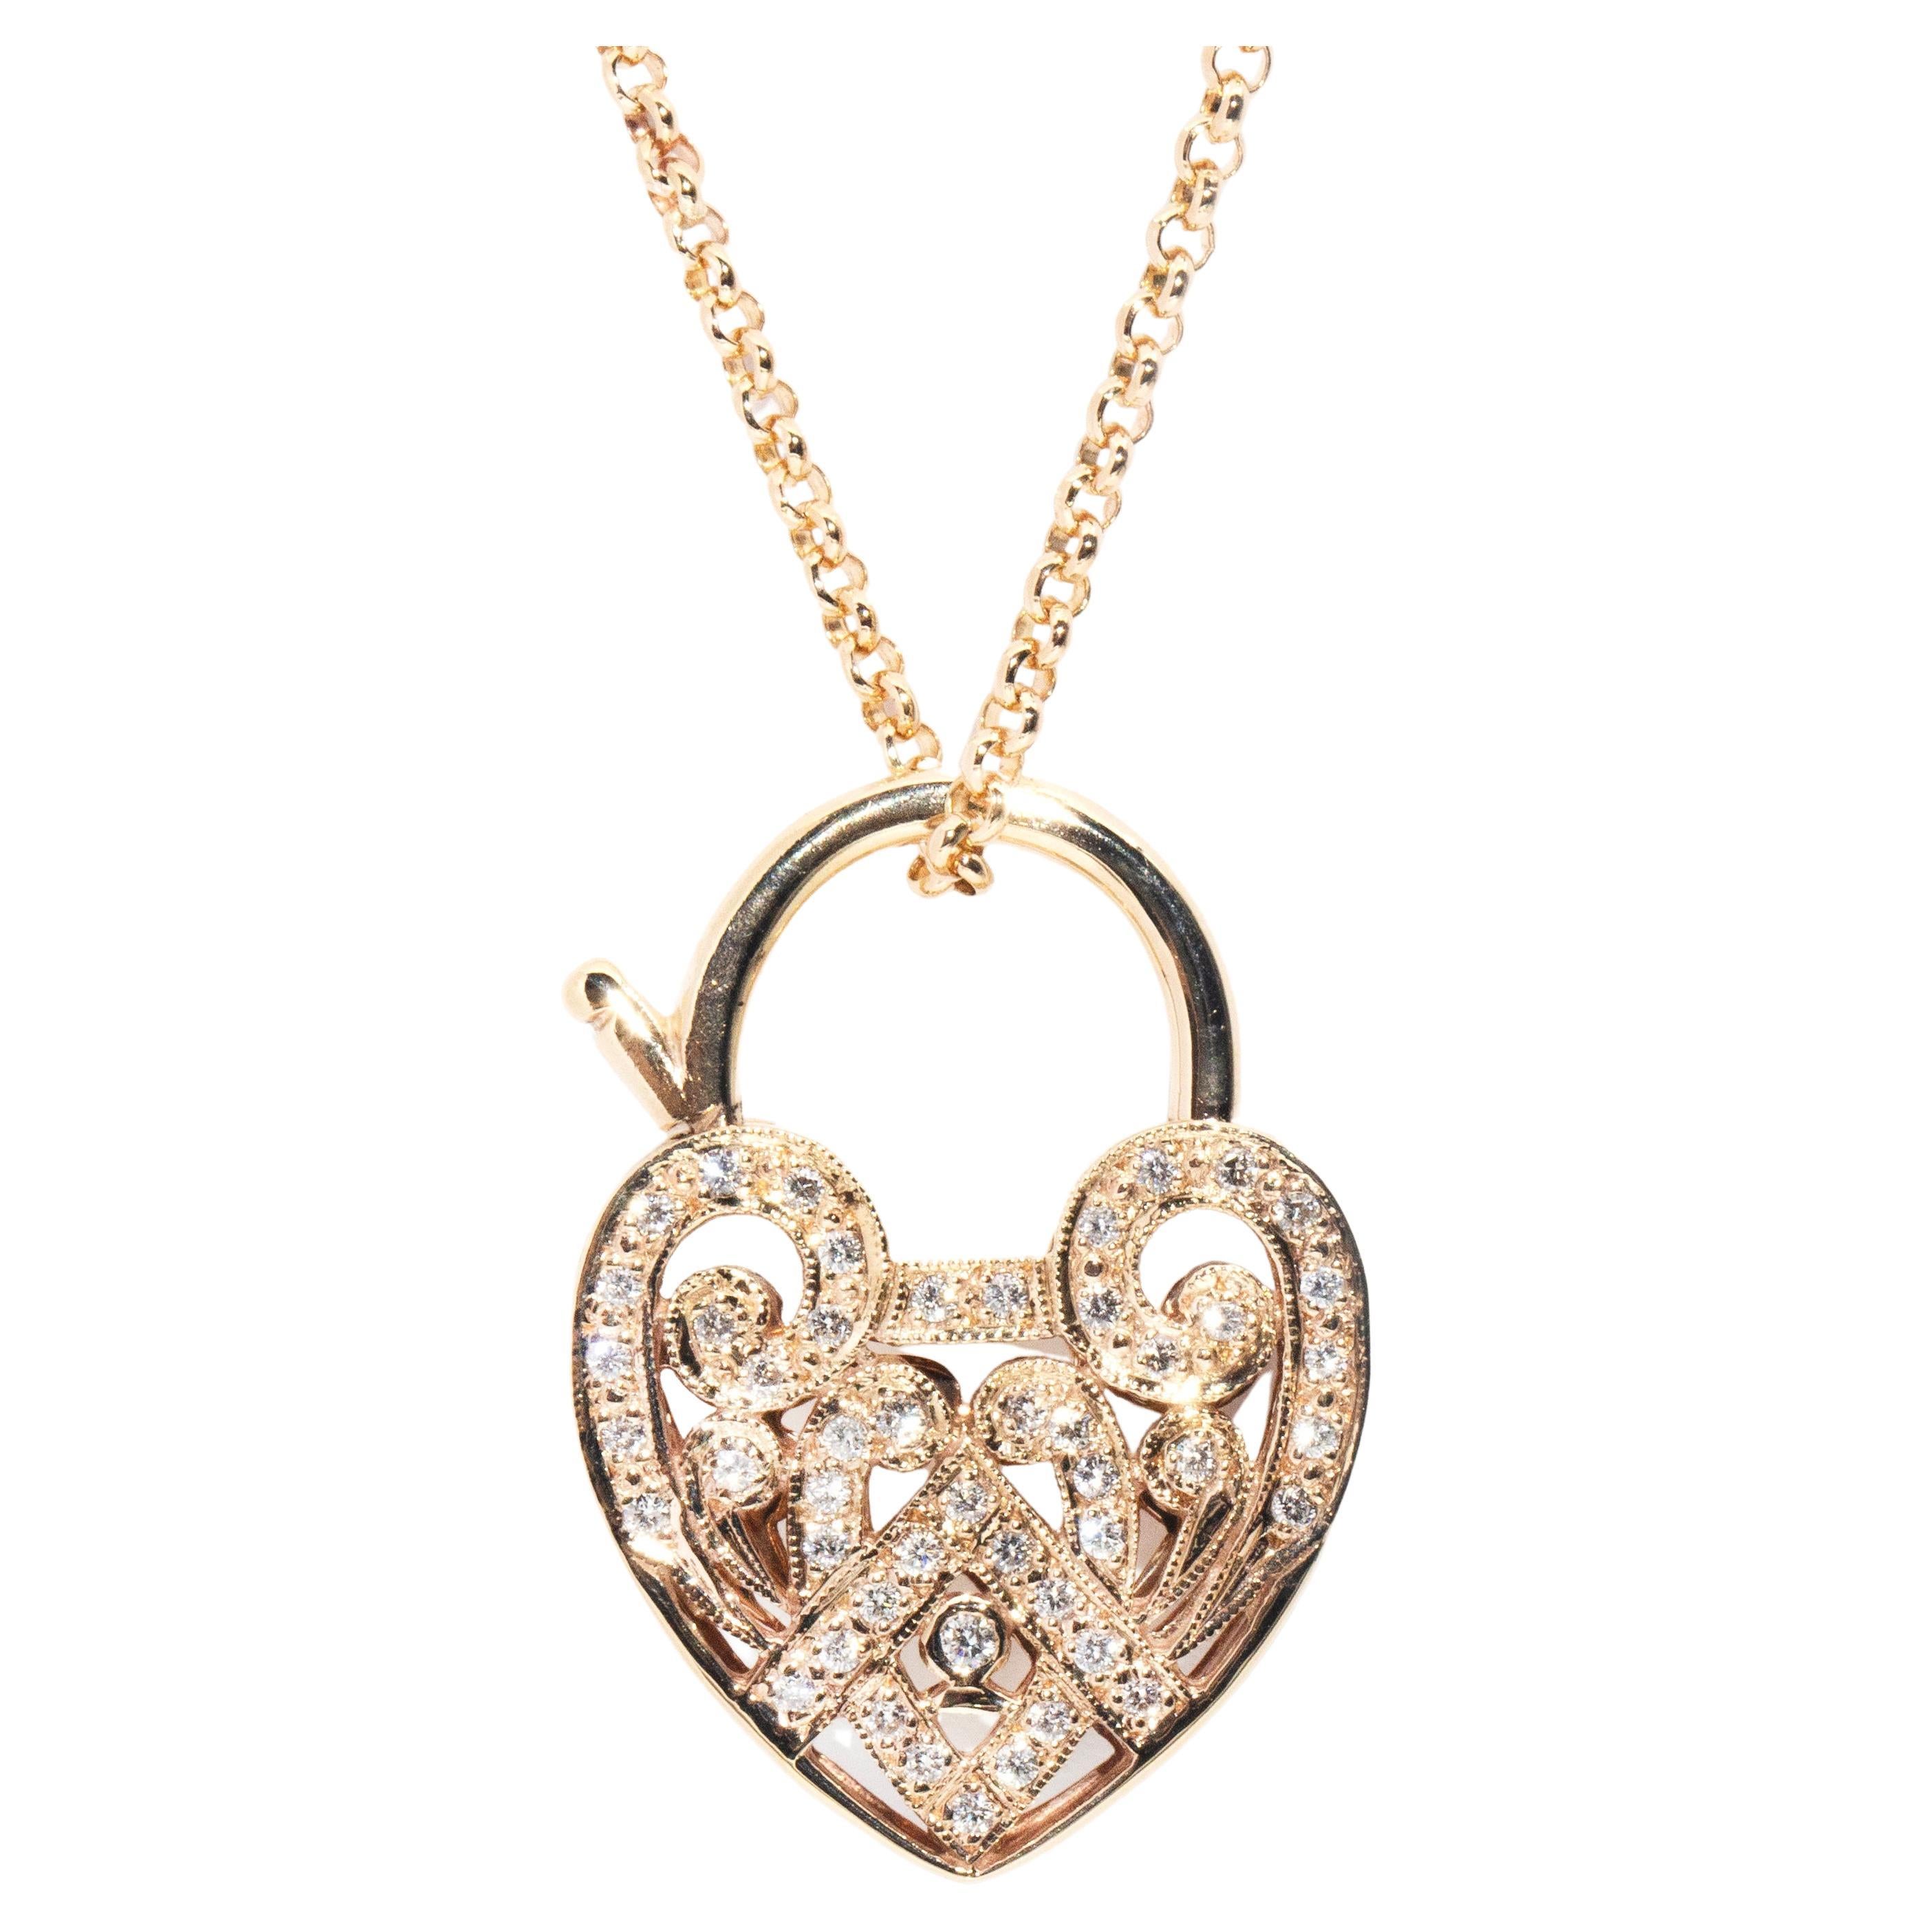 Circa 1980s 0.50 Carat Diamond Vintage 9 Carat Gold Heart Padlock and Chain